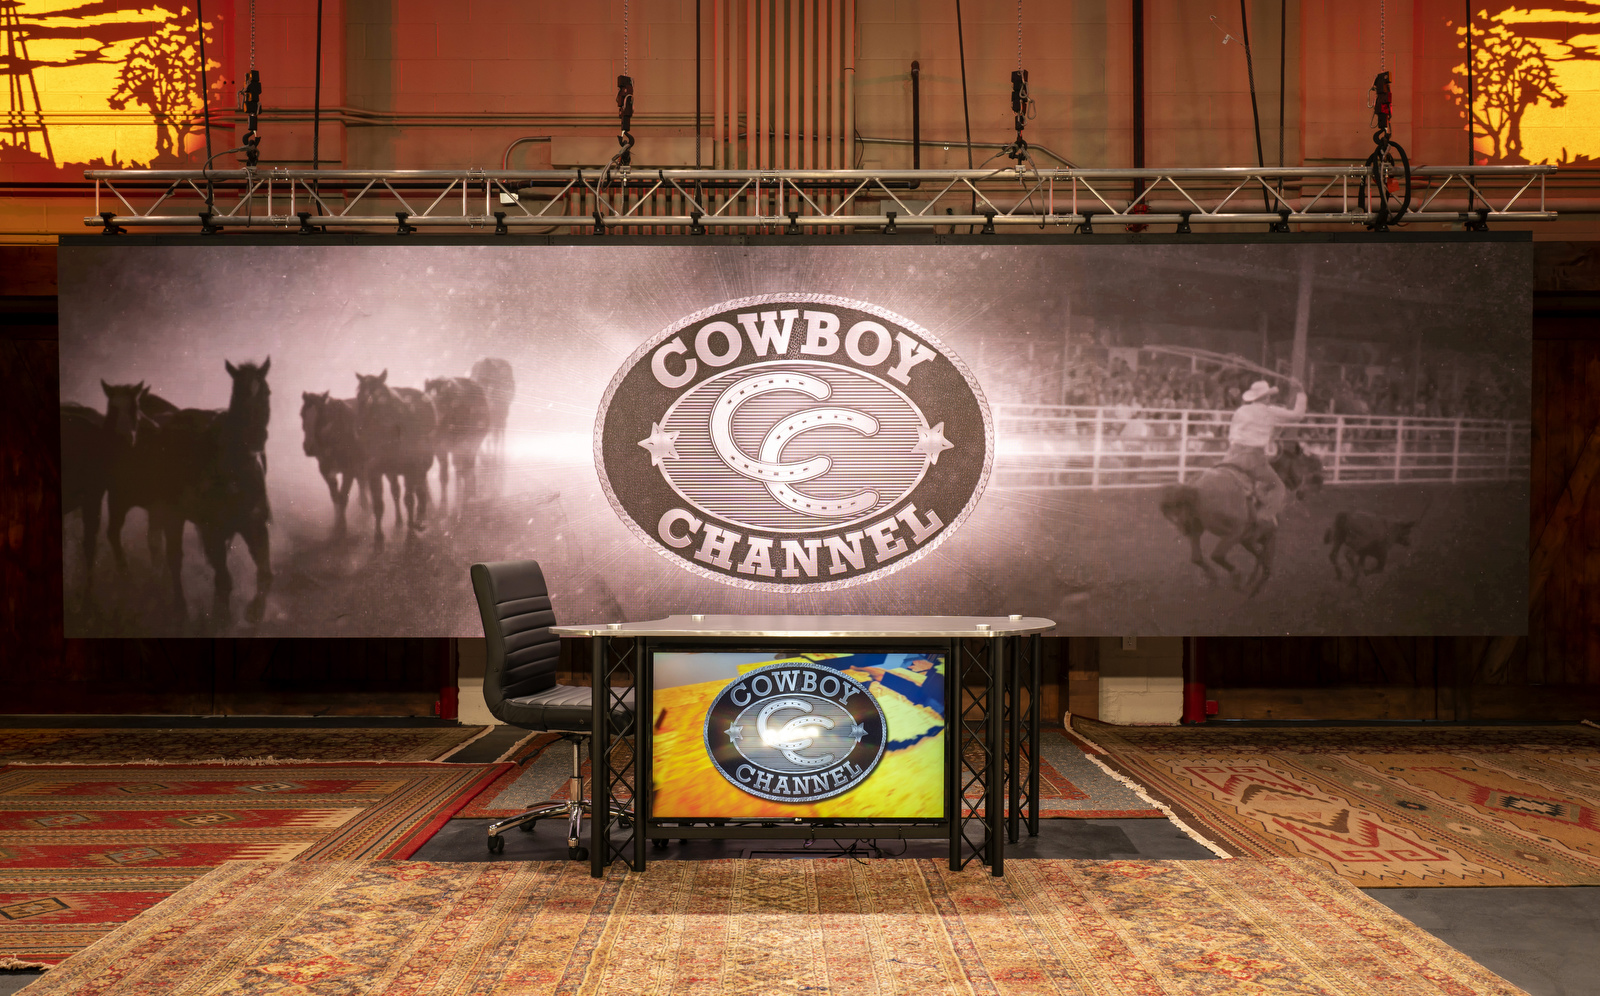 ncs_rfd_cowboy-channel_auction-barn_fort-worth_004